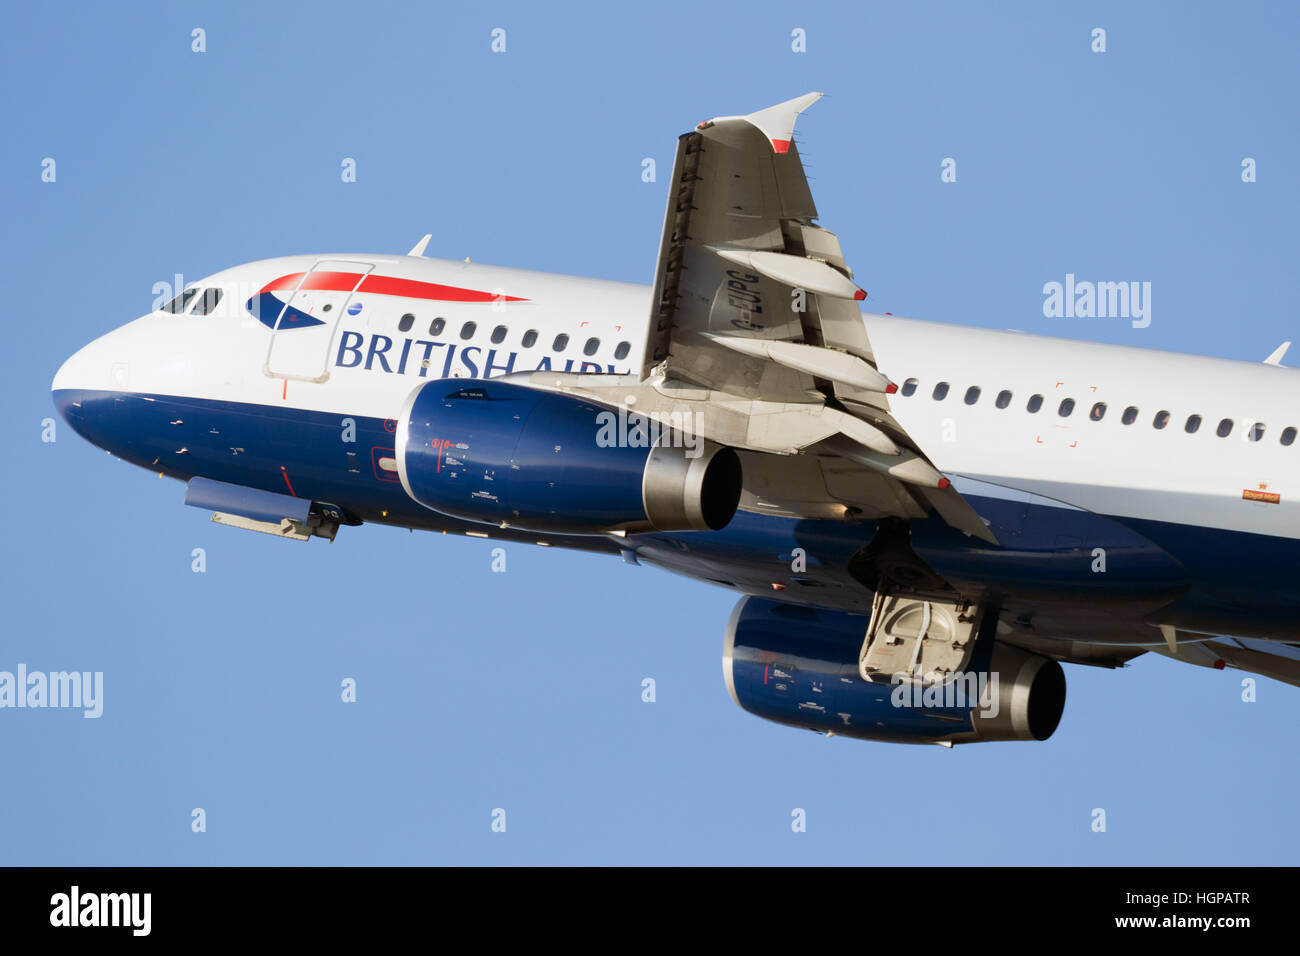 British Airways Airbus A319-131 departing from Dusseldorf airport. Stock Photo